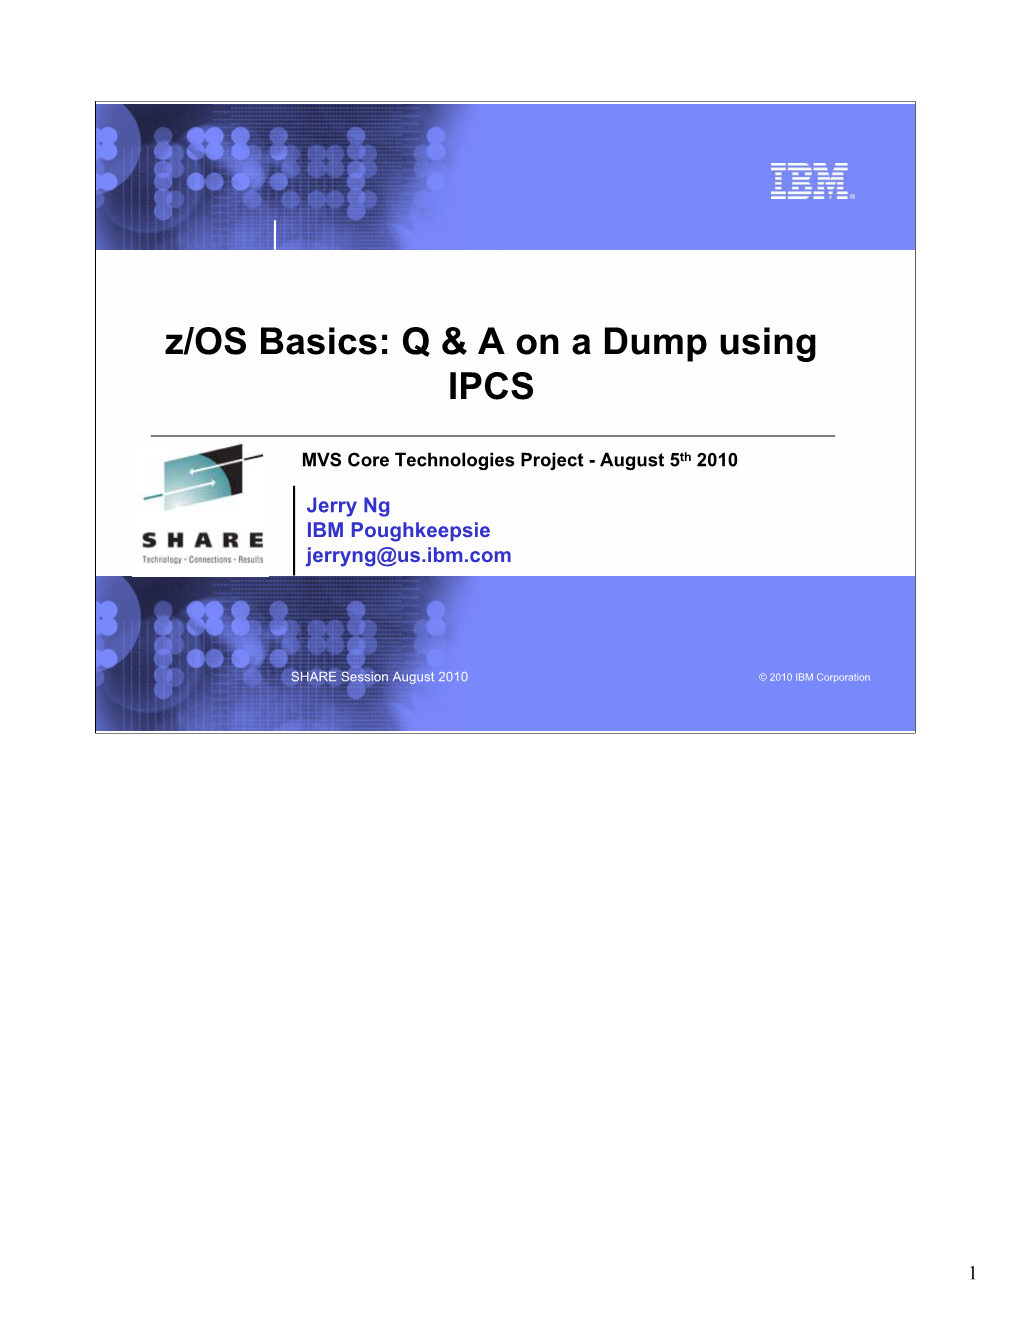 Z/OS Basics: Q & a on a Dump Using IPCS